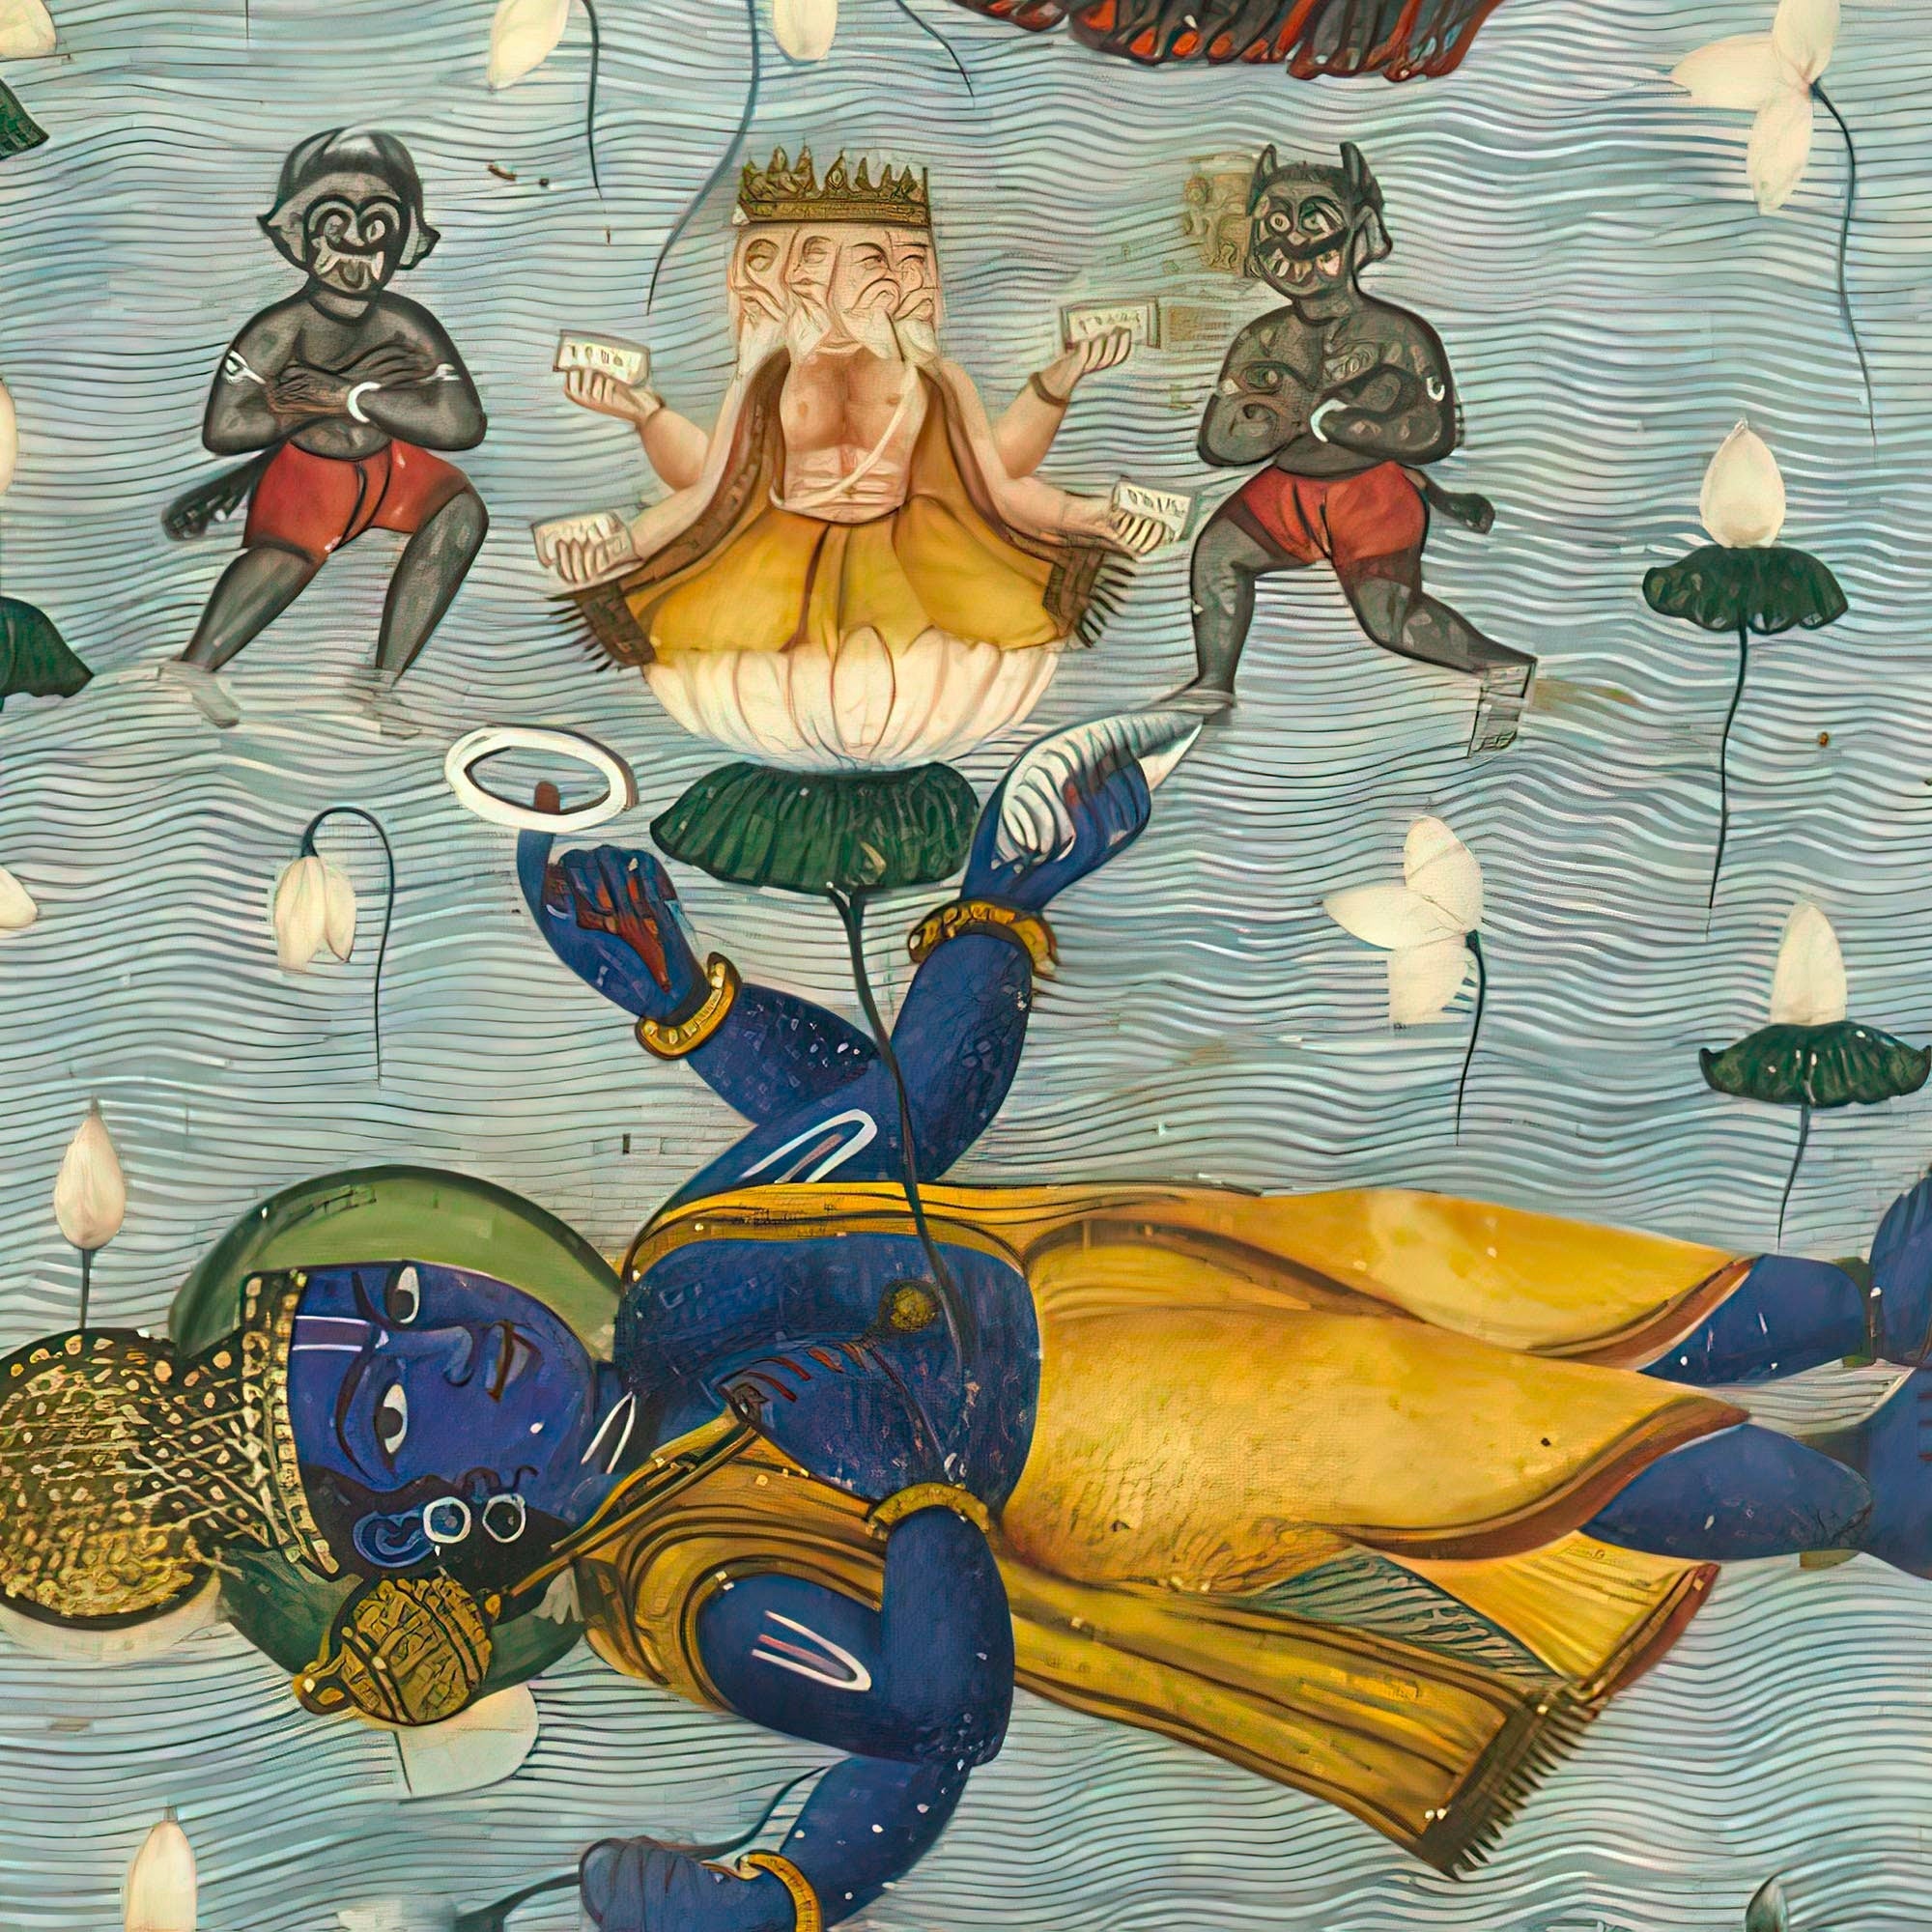 T-shirt Kali Withdraws from Vishnu, as Brahma Emerges from Sleep, Antique Hindu Graphic T-Shirt Tee